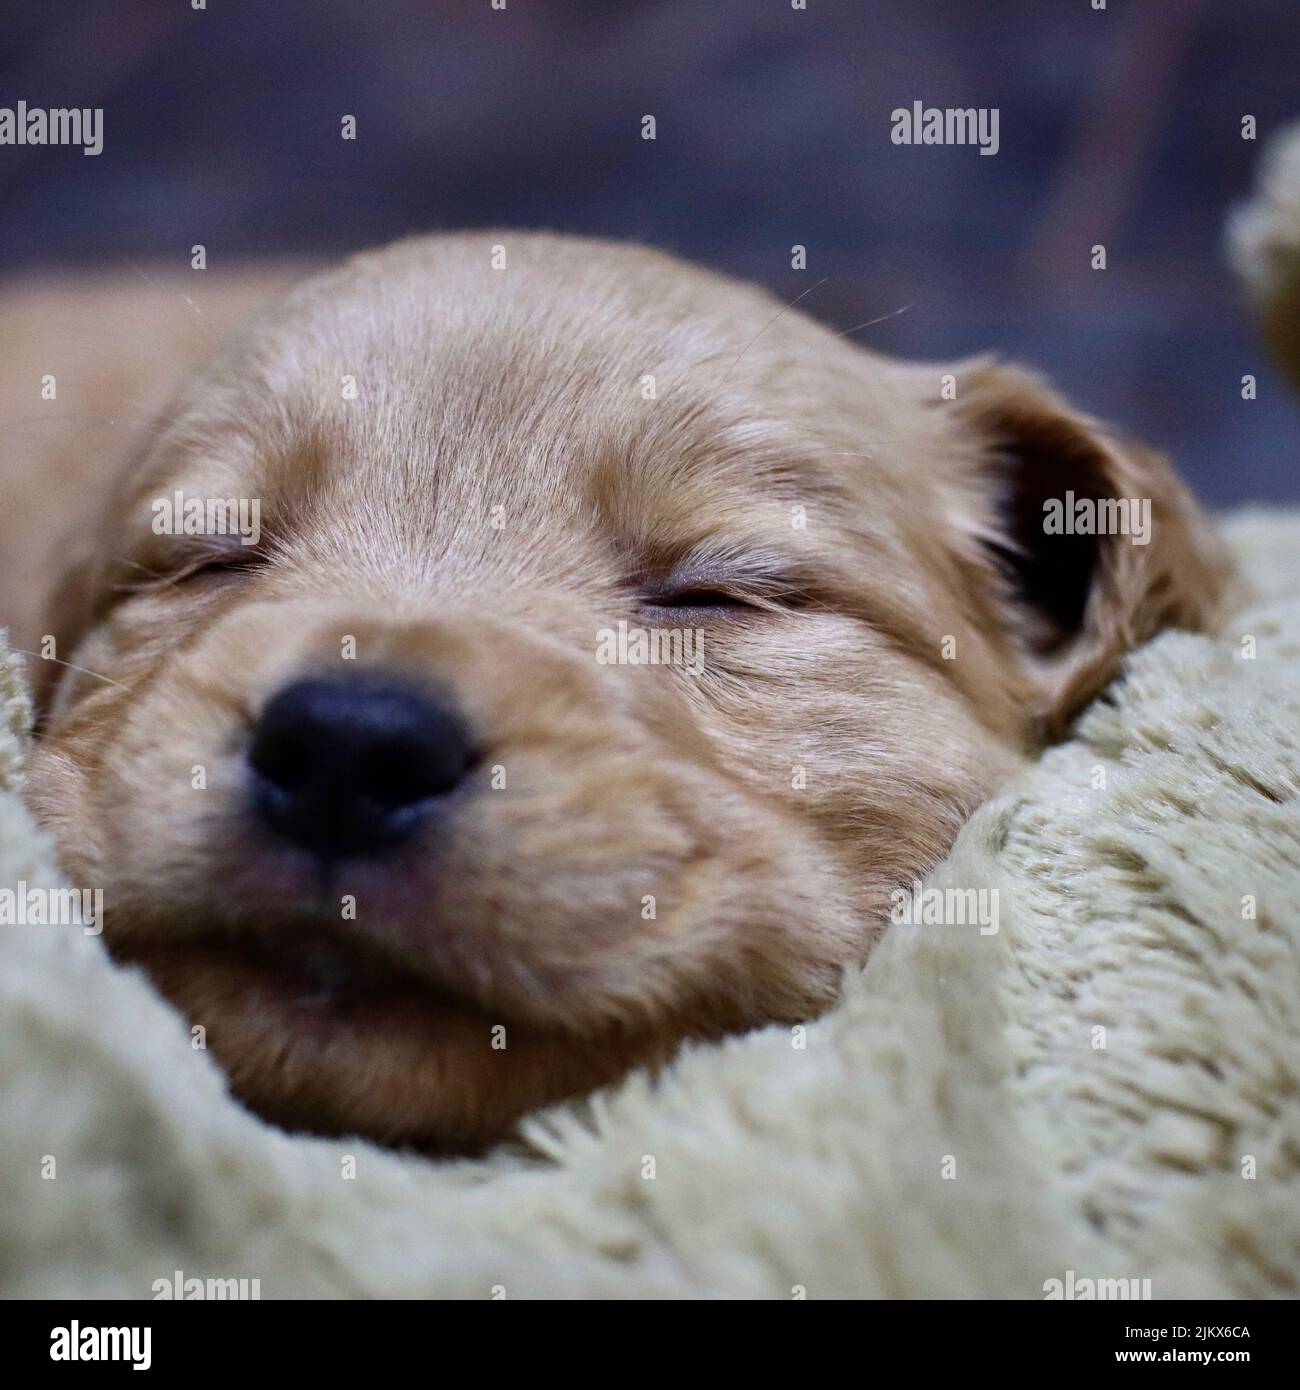 A closeup portrait of a Golden Retriever puppy lying on a soft fabric, sleeping Stock Photo